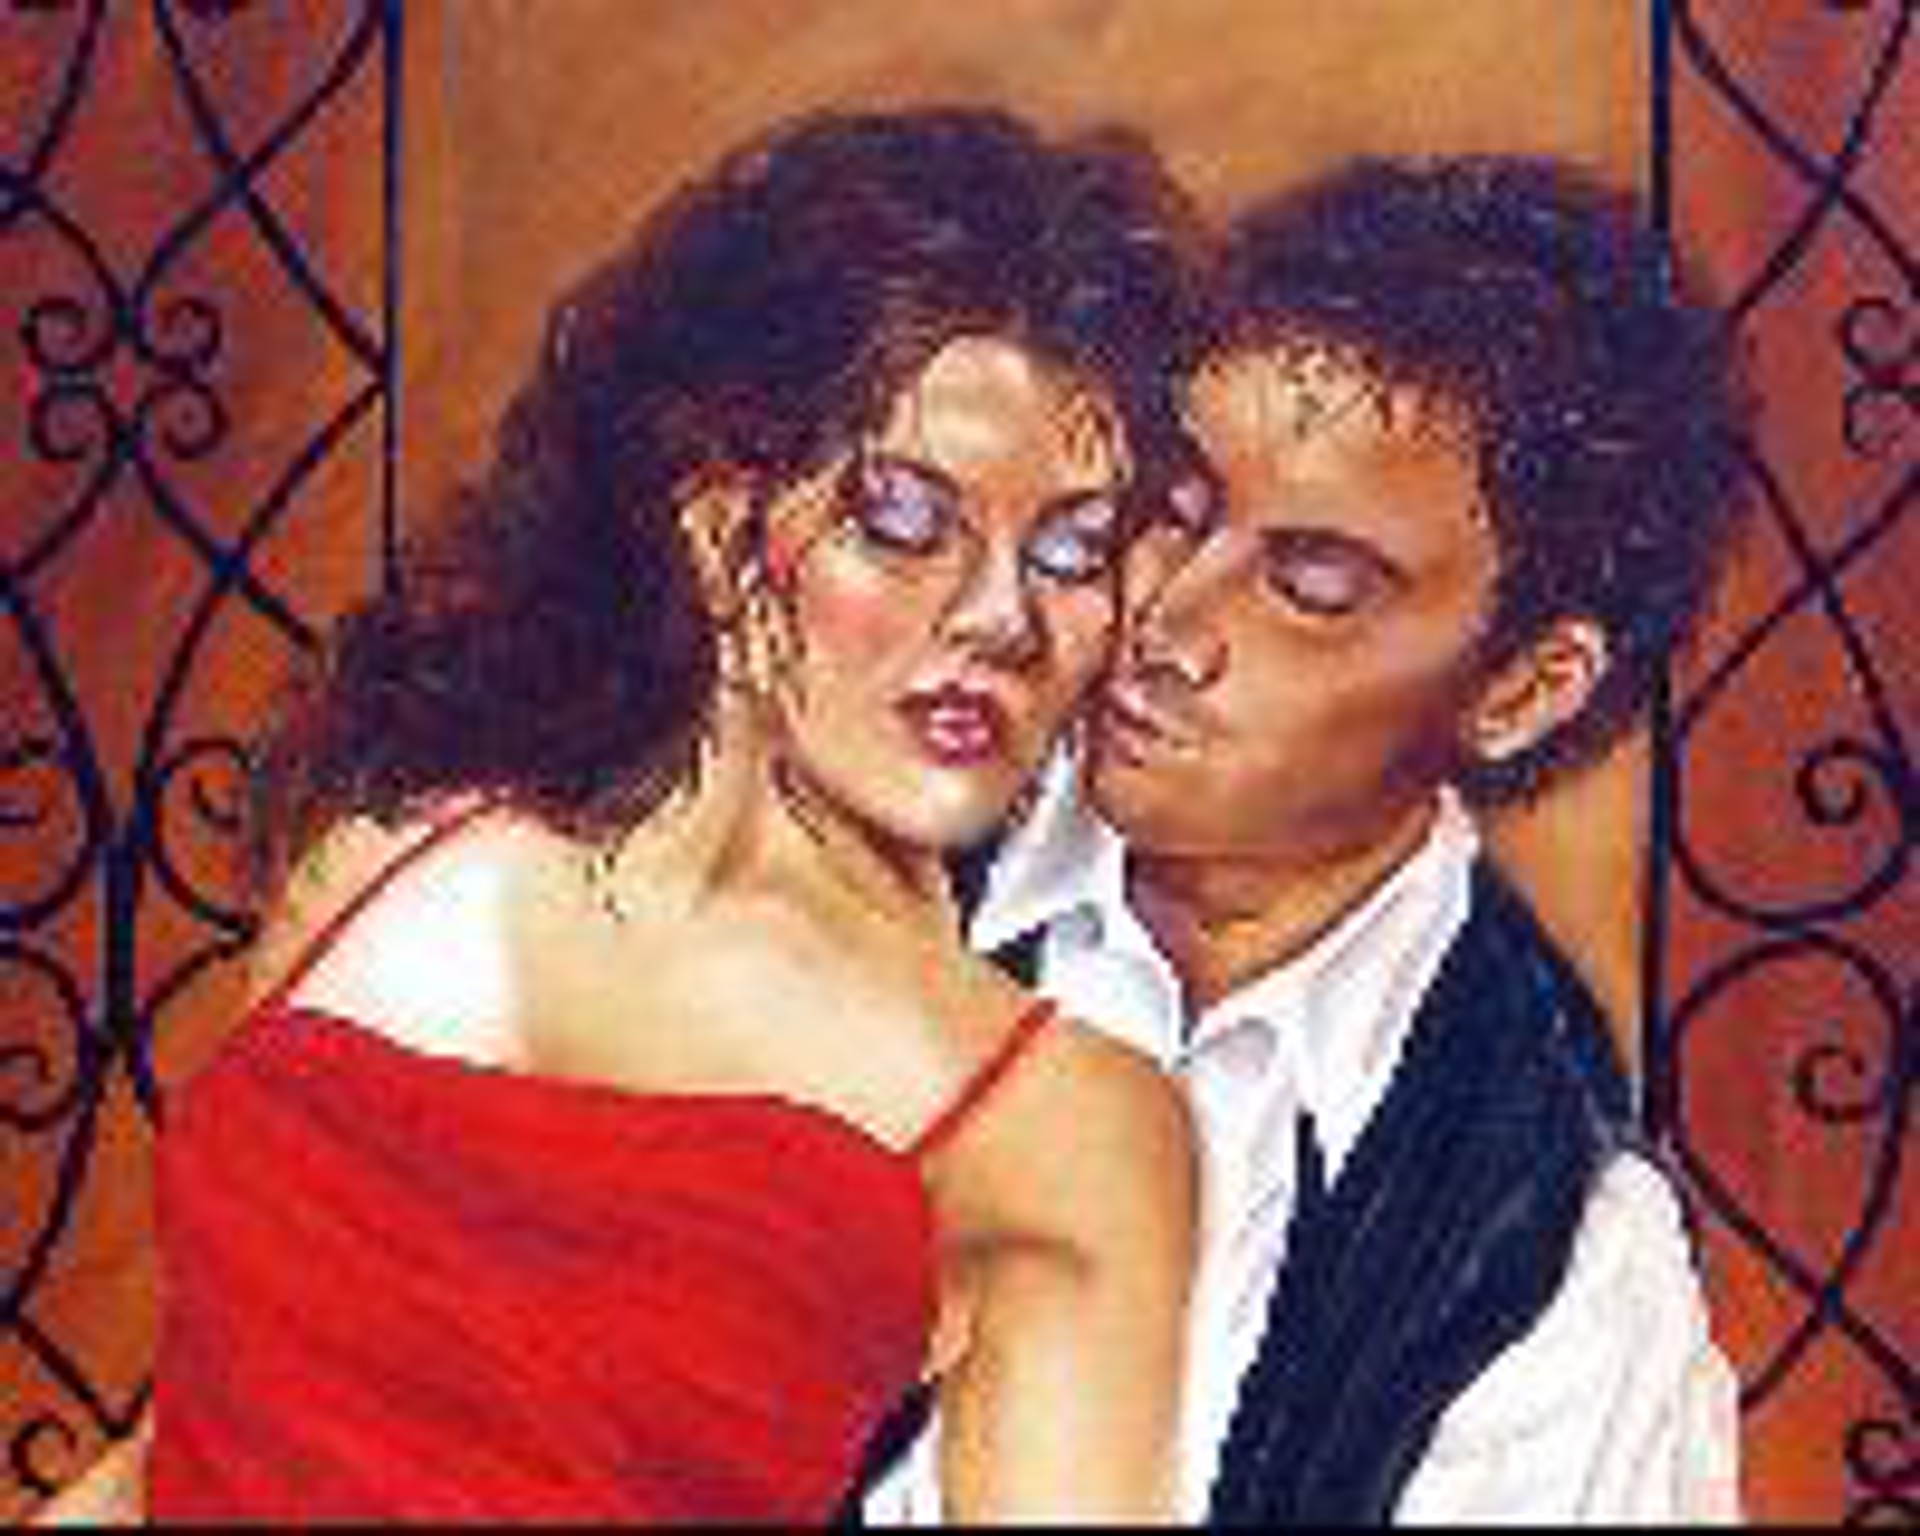 Tango Couple by Karen Seamon